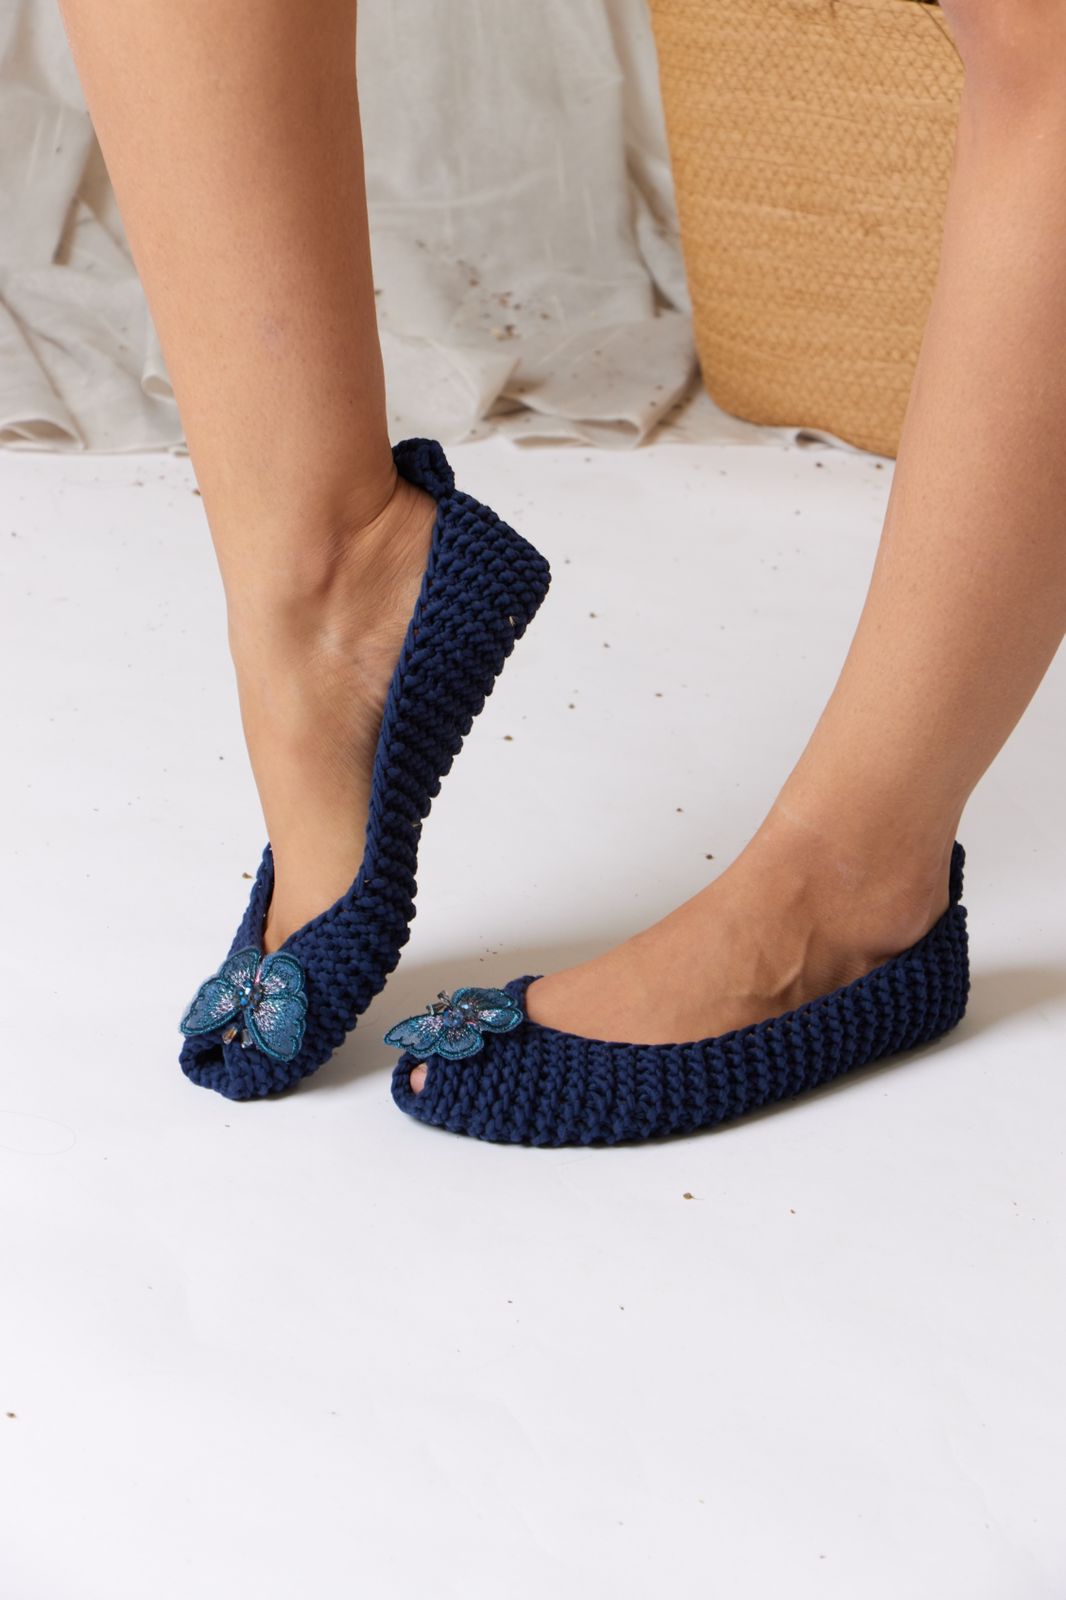 Navy blue slippers